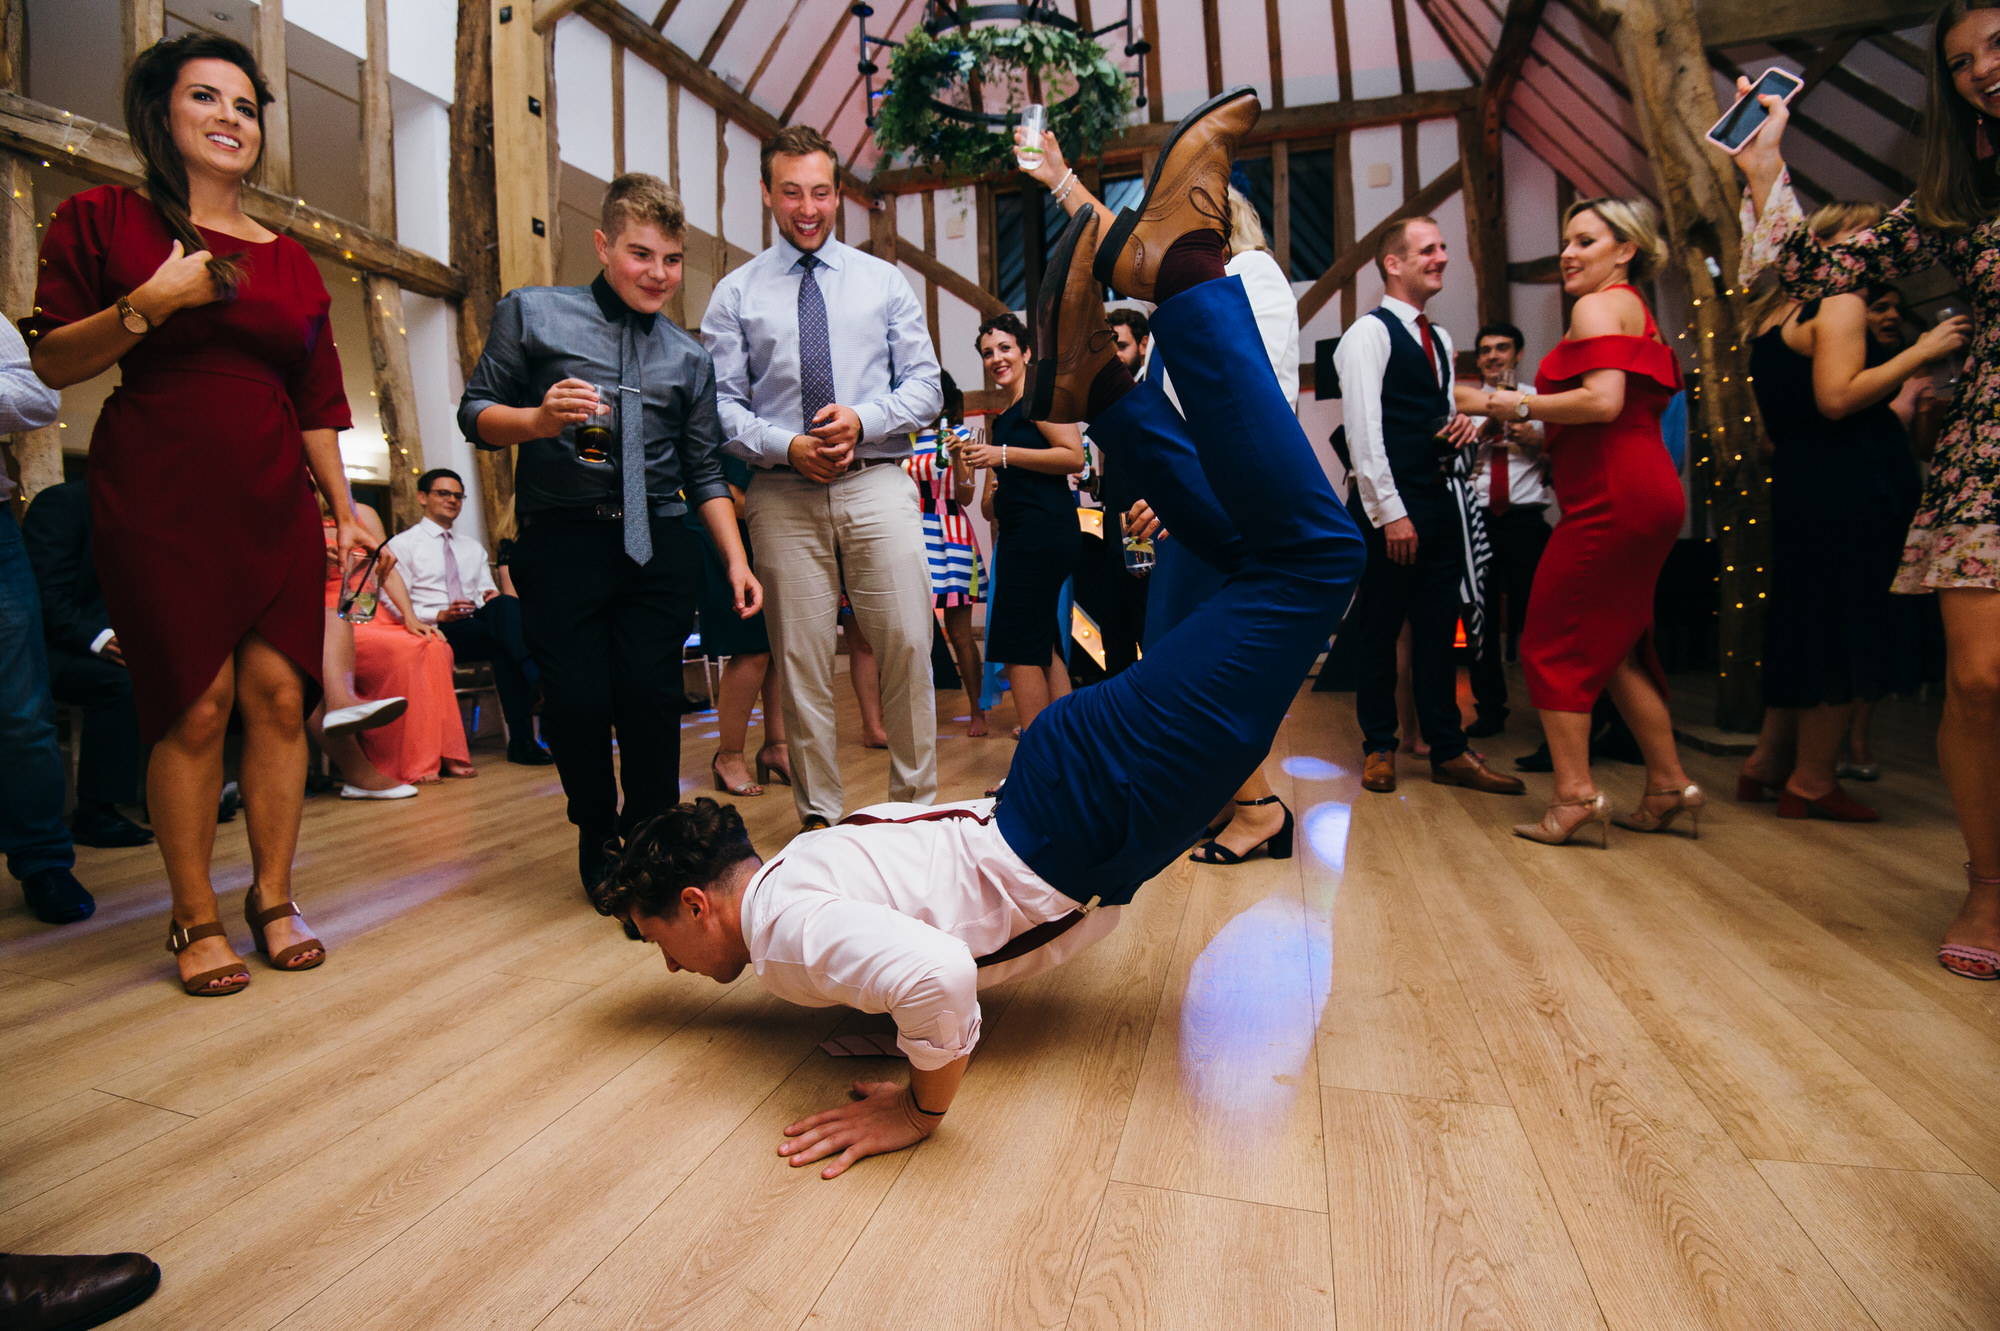 Colville hall wedding guest worm dancing